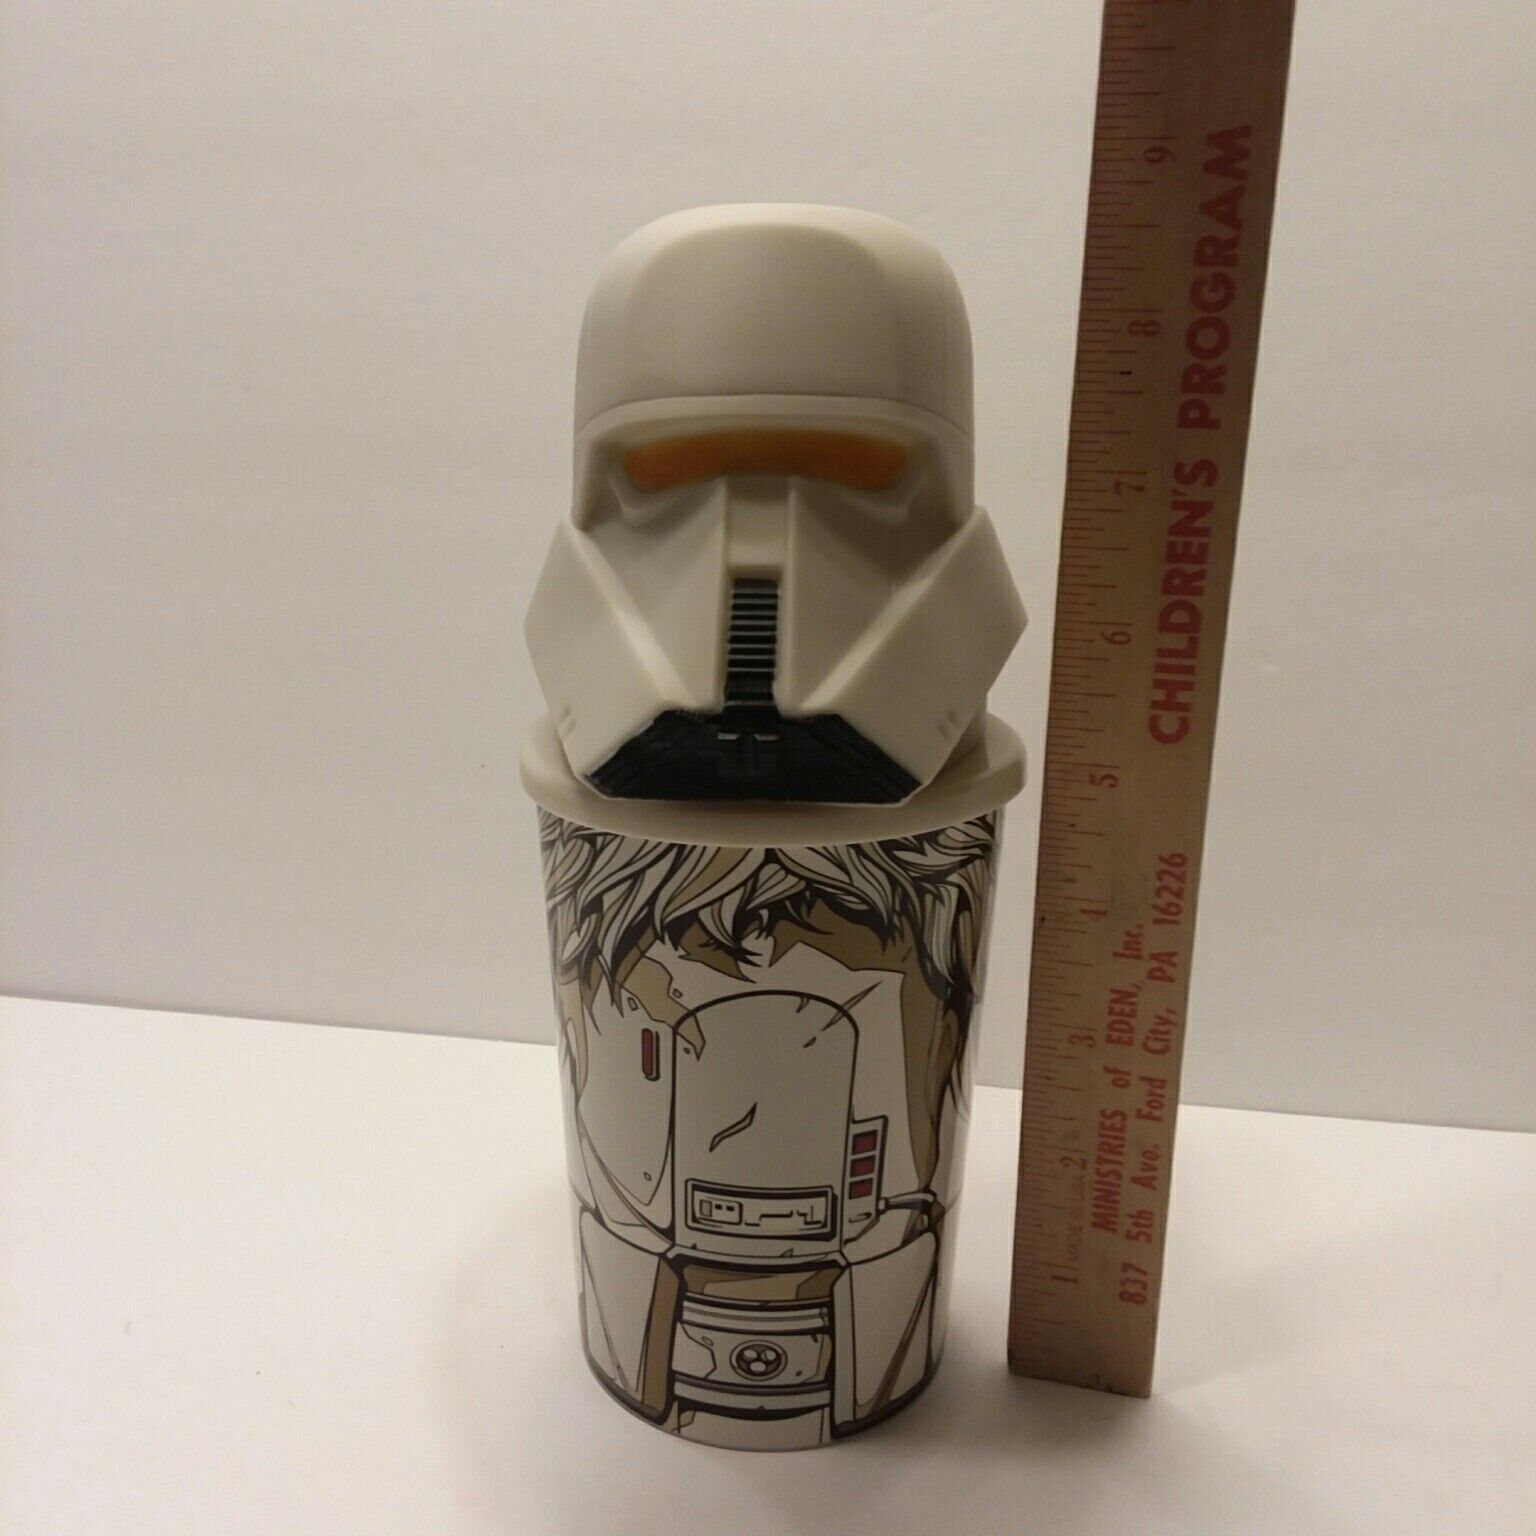 Star Wars Trooper cup Straw Dennys Solo 20 Oz